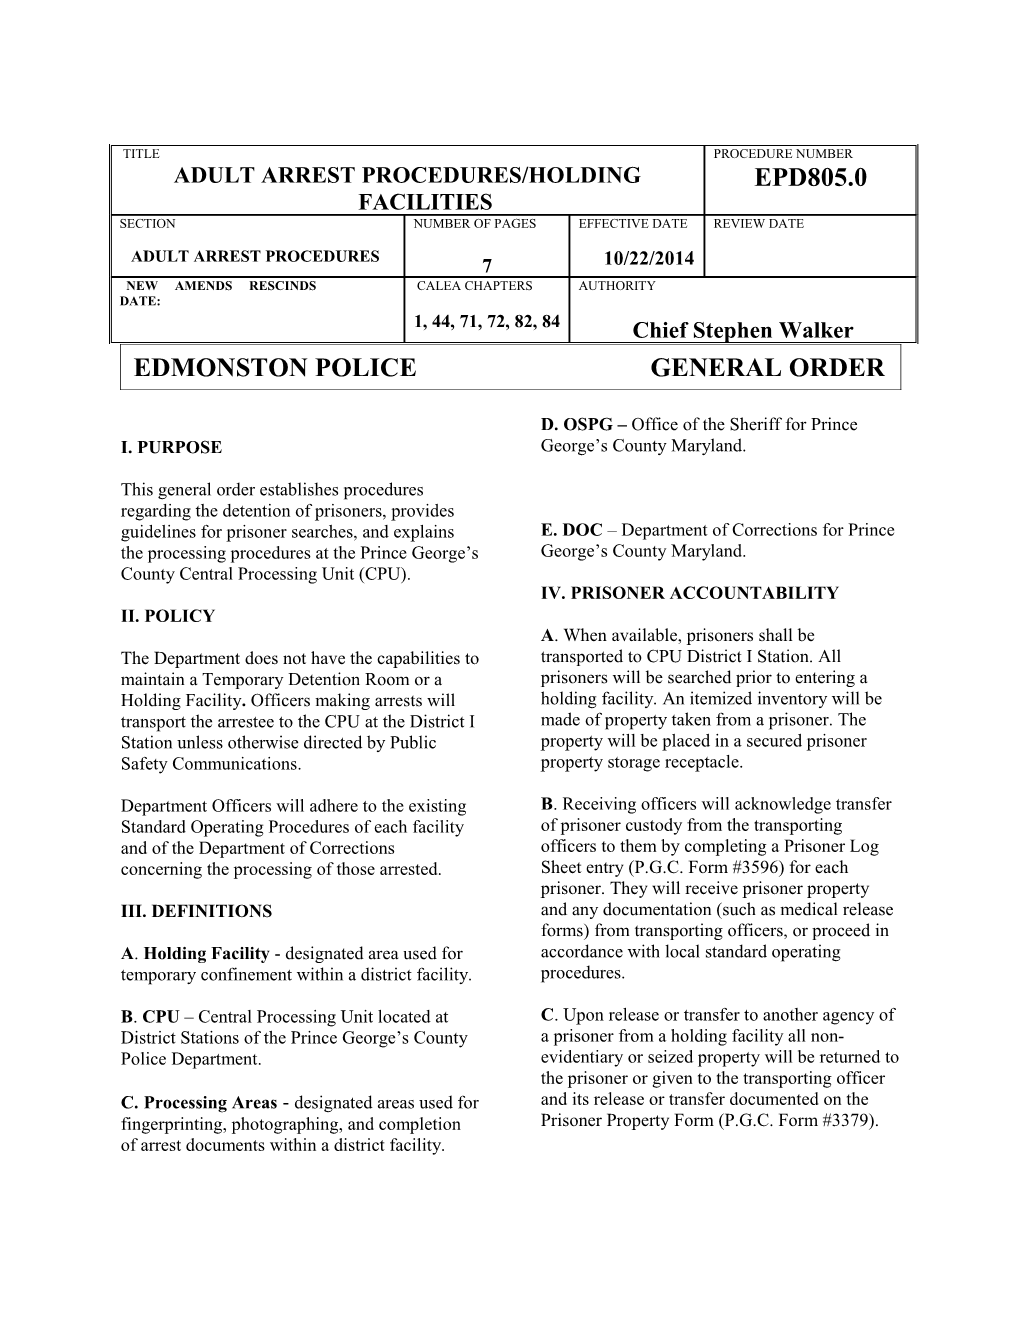 Adult Arrest Procedures/Holding Facilities Epd 805.0